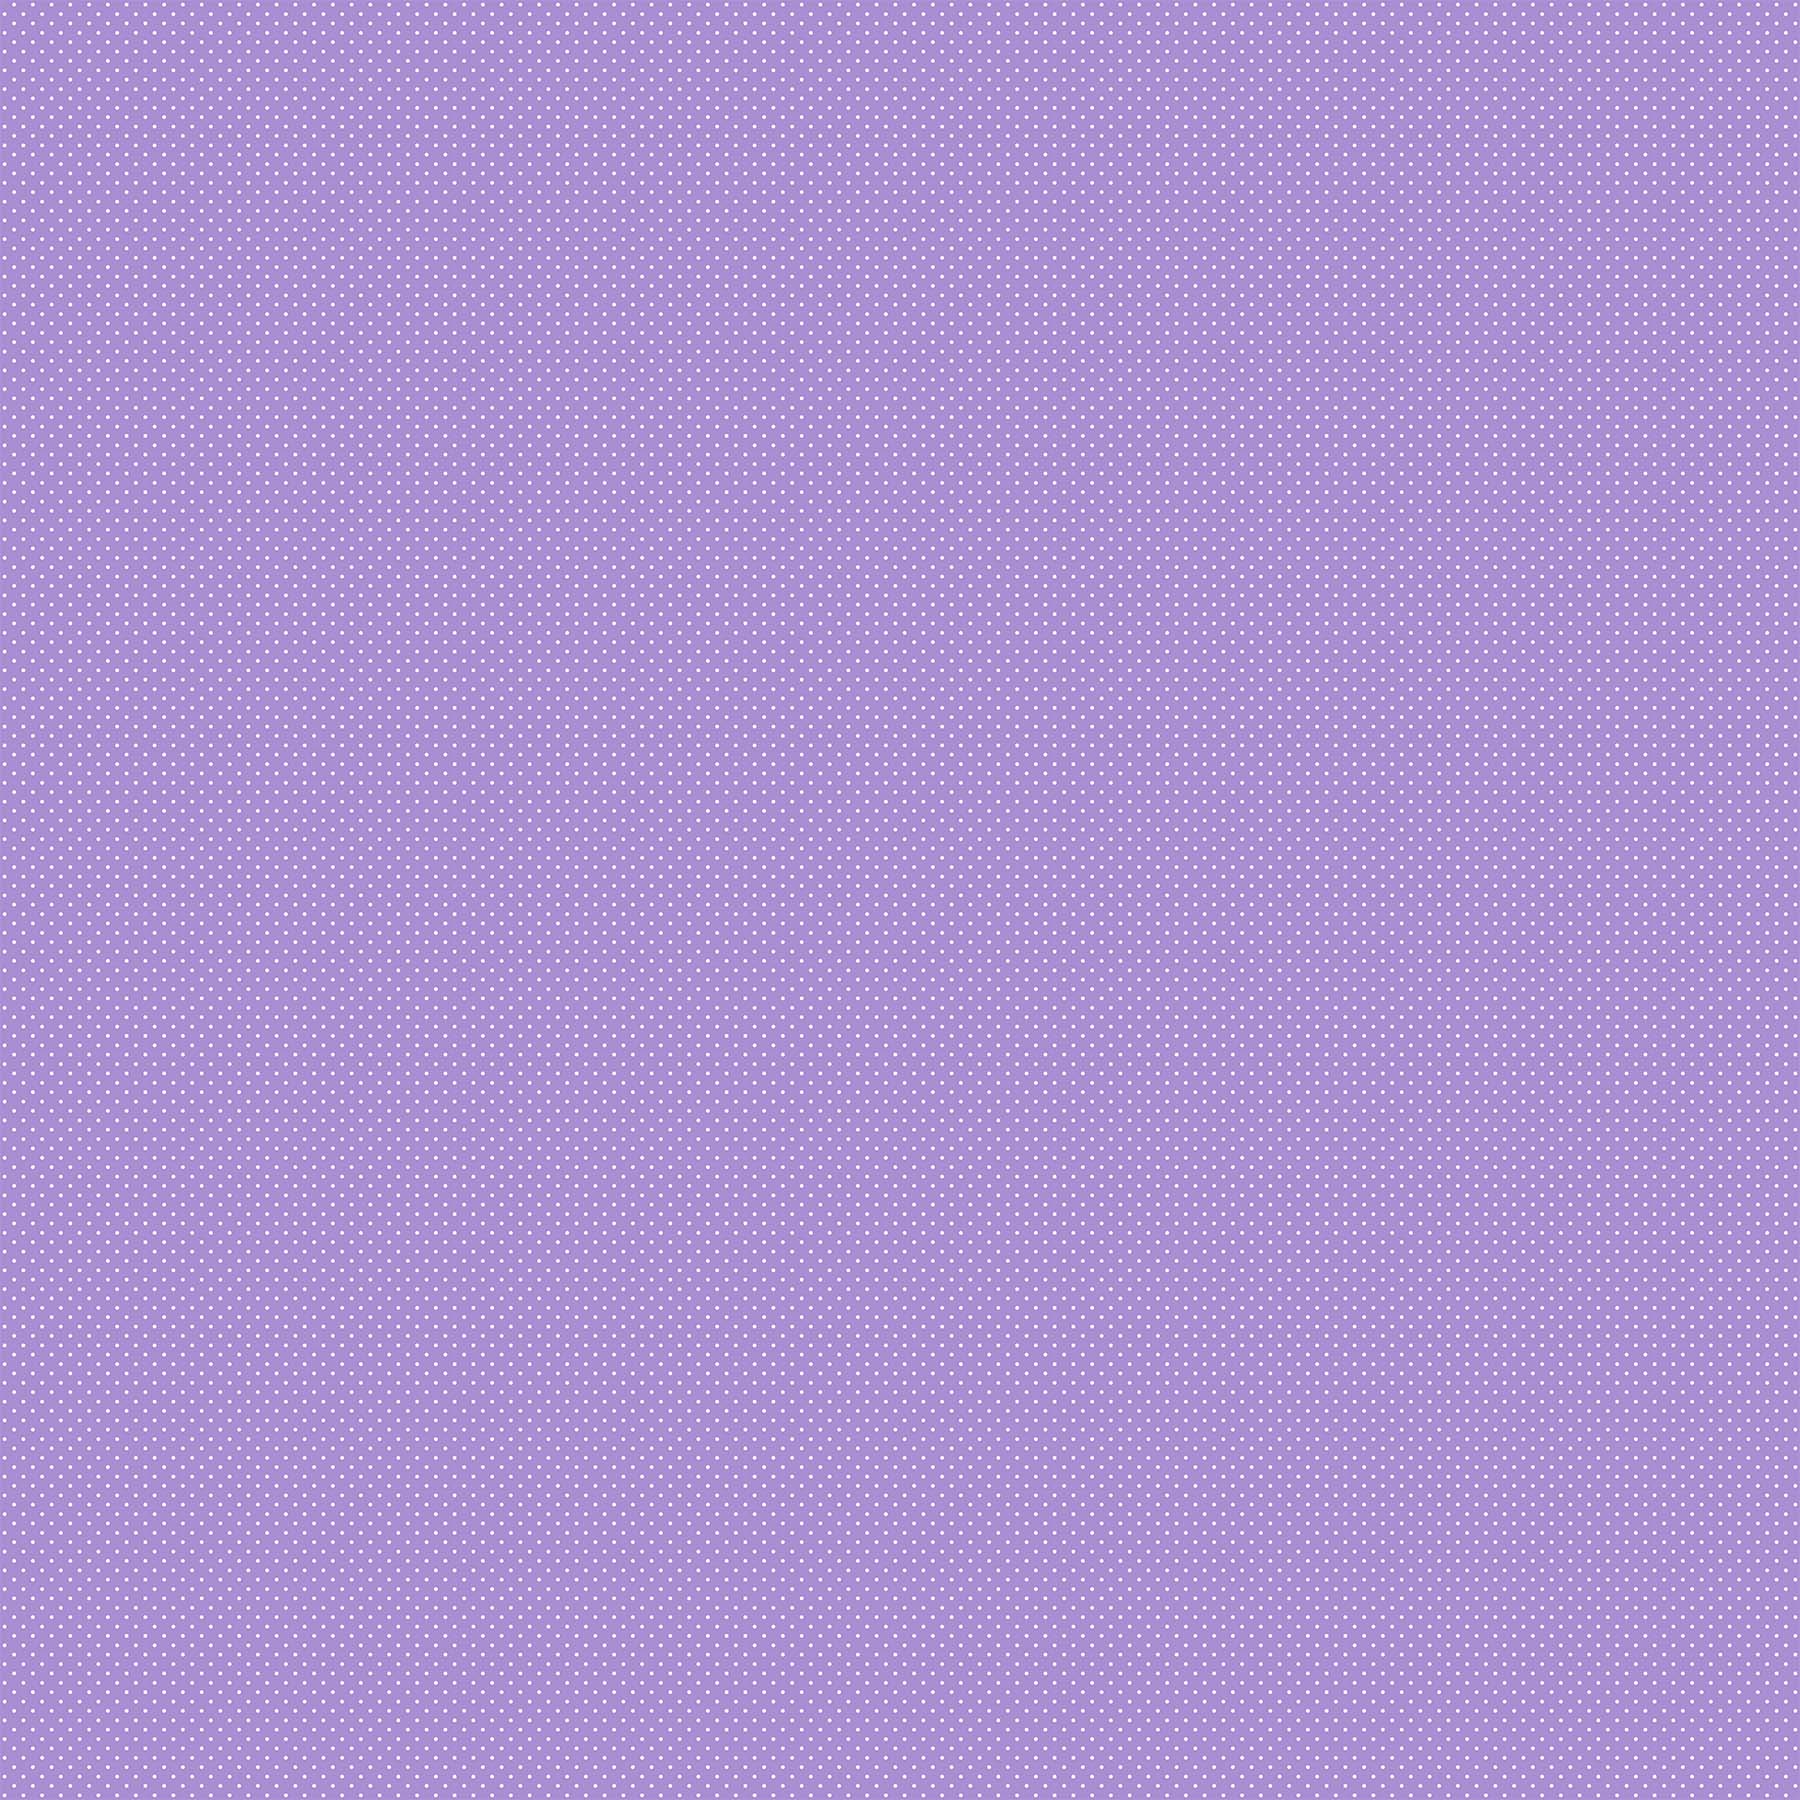 Fabric, Dreamland, Purple Swiss Dot 24322 80